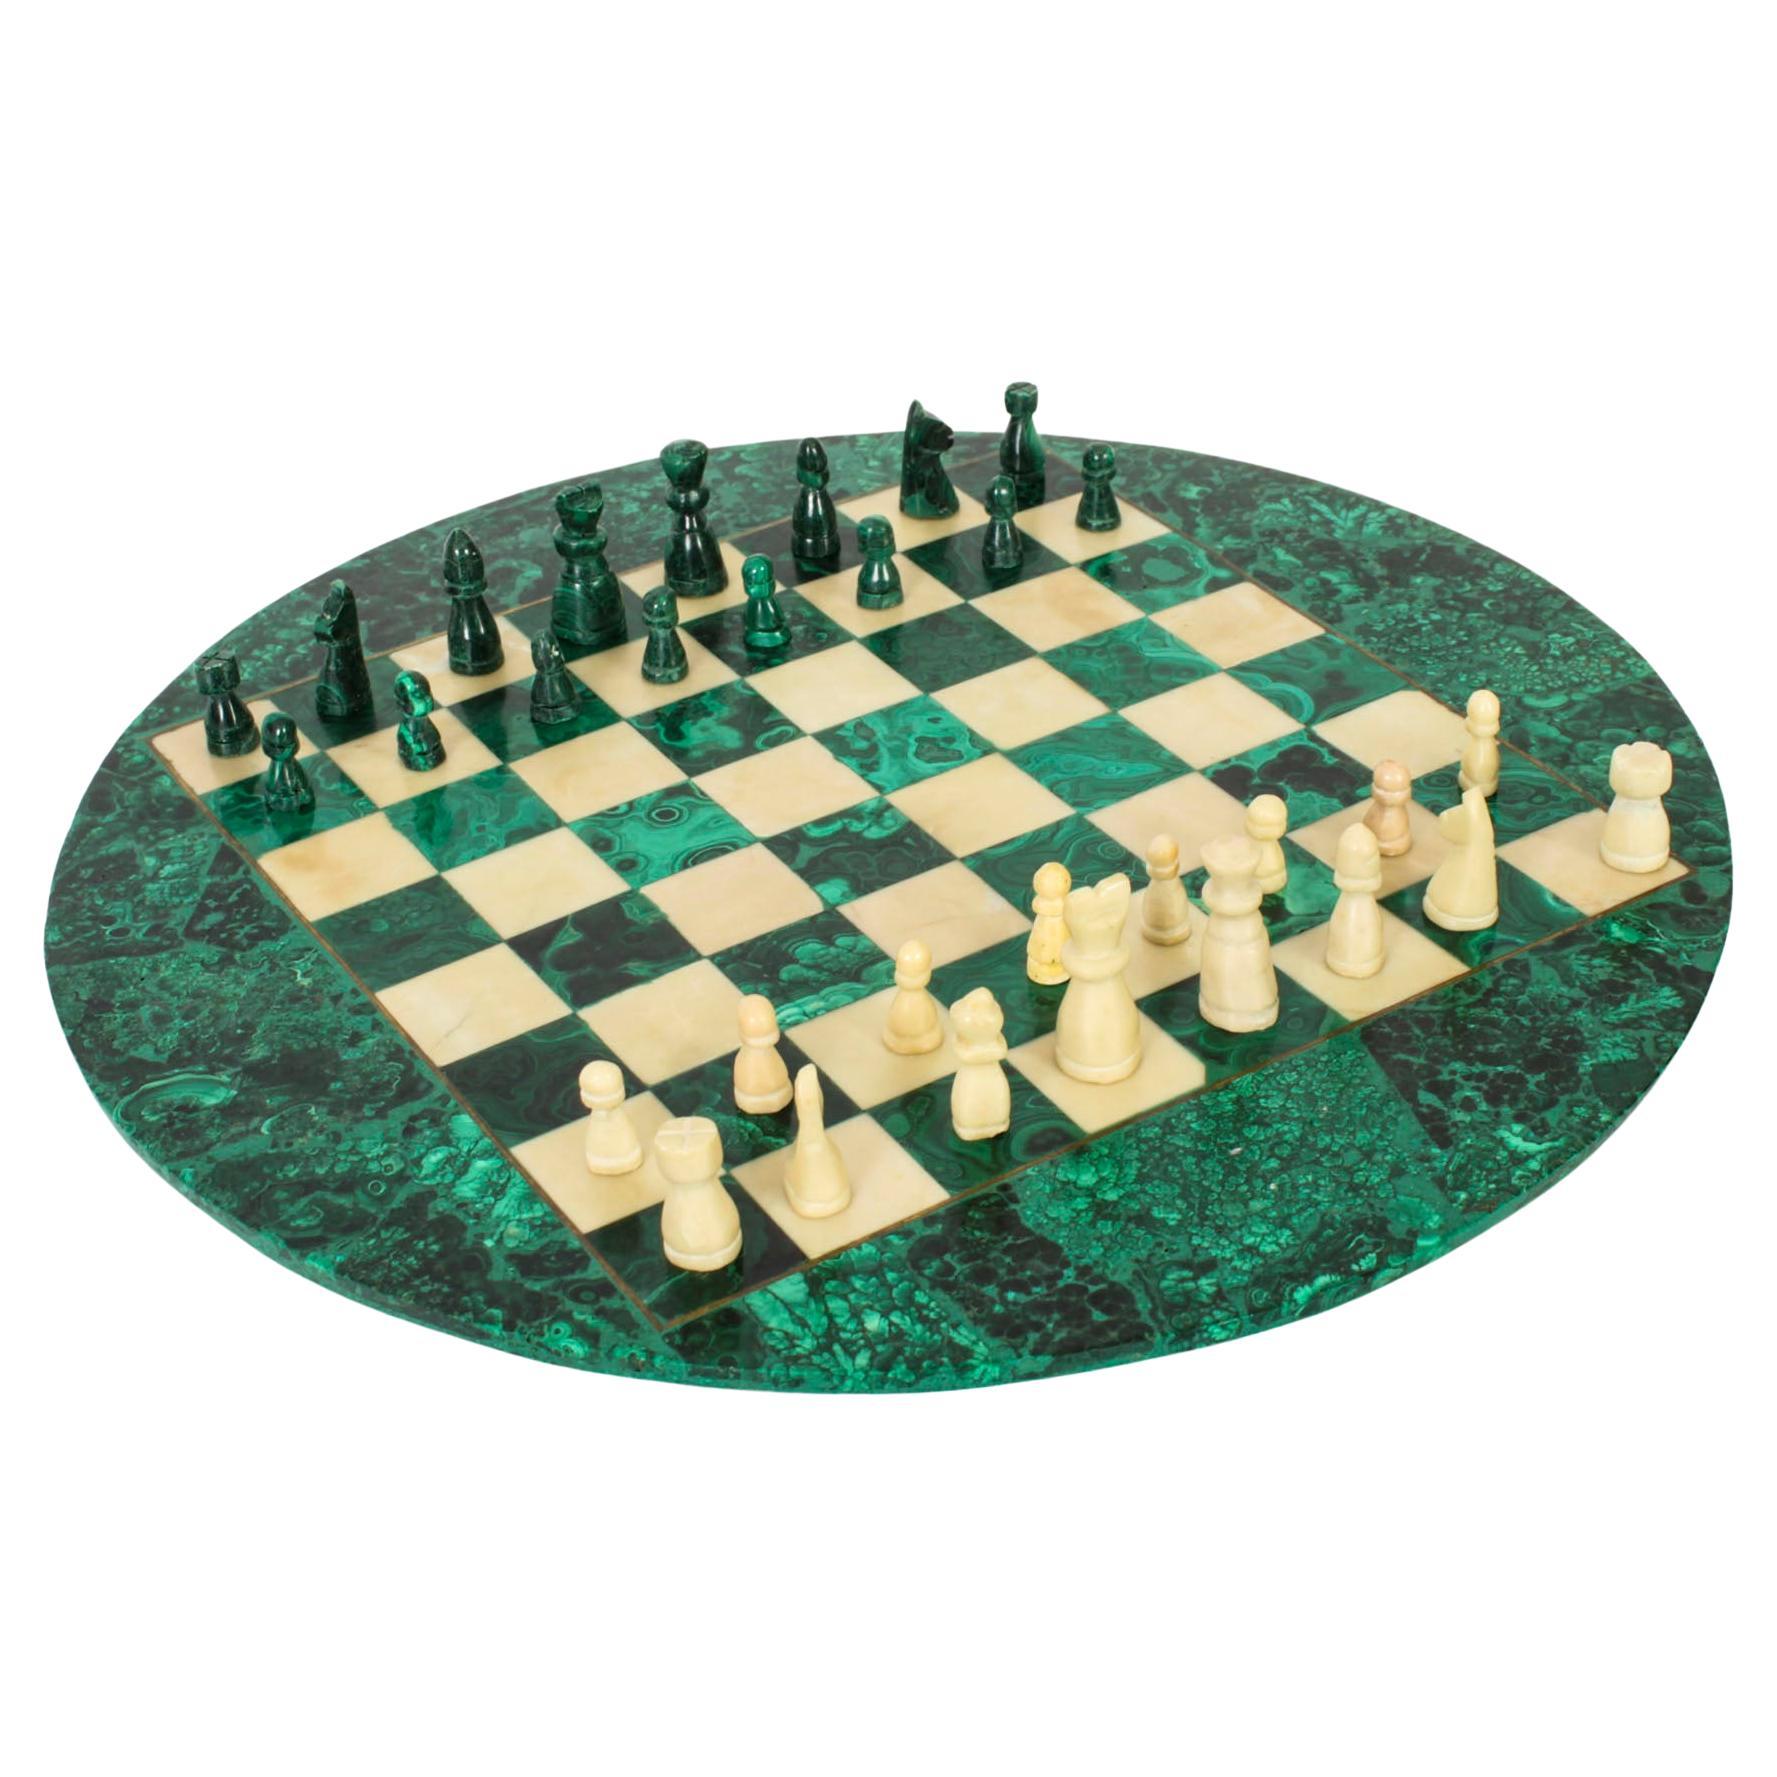 Malachite Chess - 9 For Sale on 1stDibs | malachite chess set